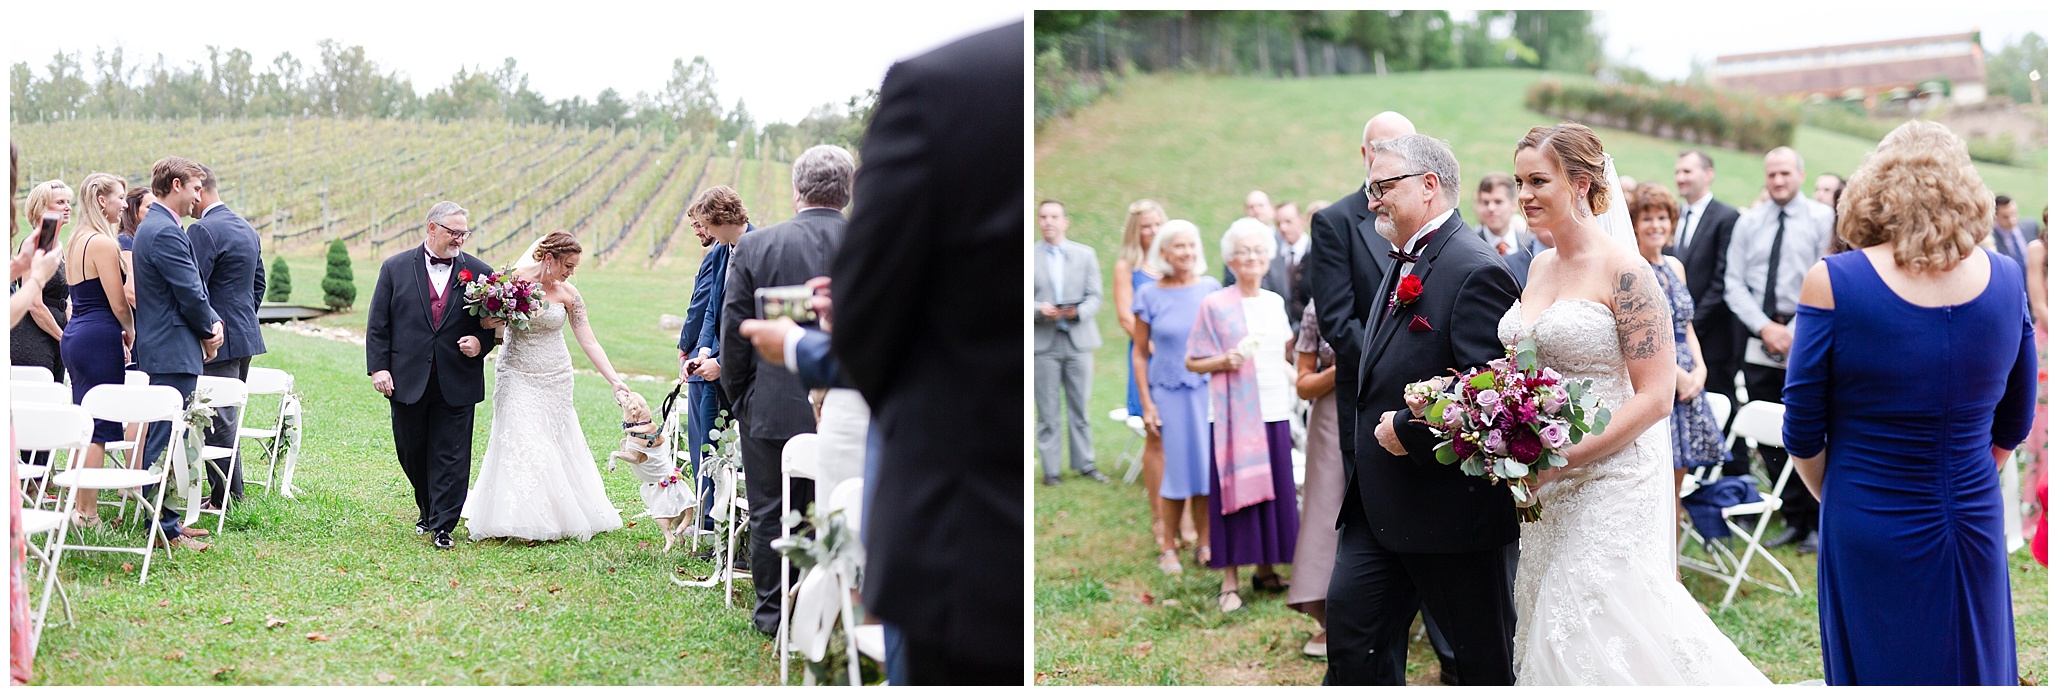 potomac point winery wedding by Northern Virginia Wedding Photographers Luke and Ashley Photography